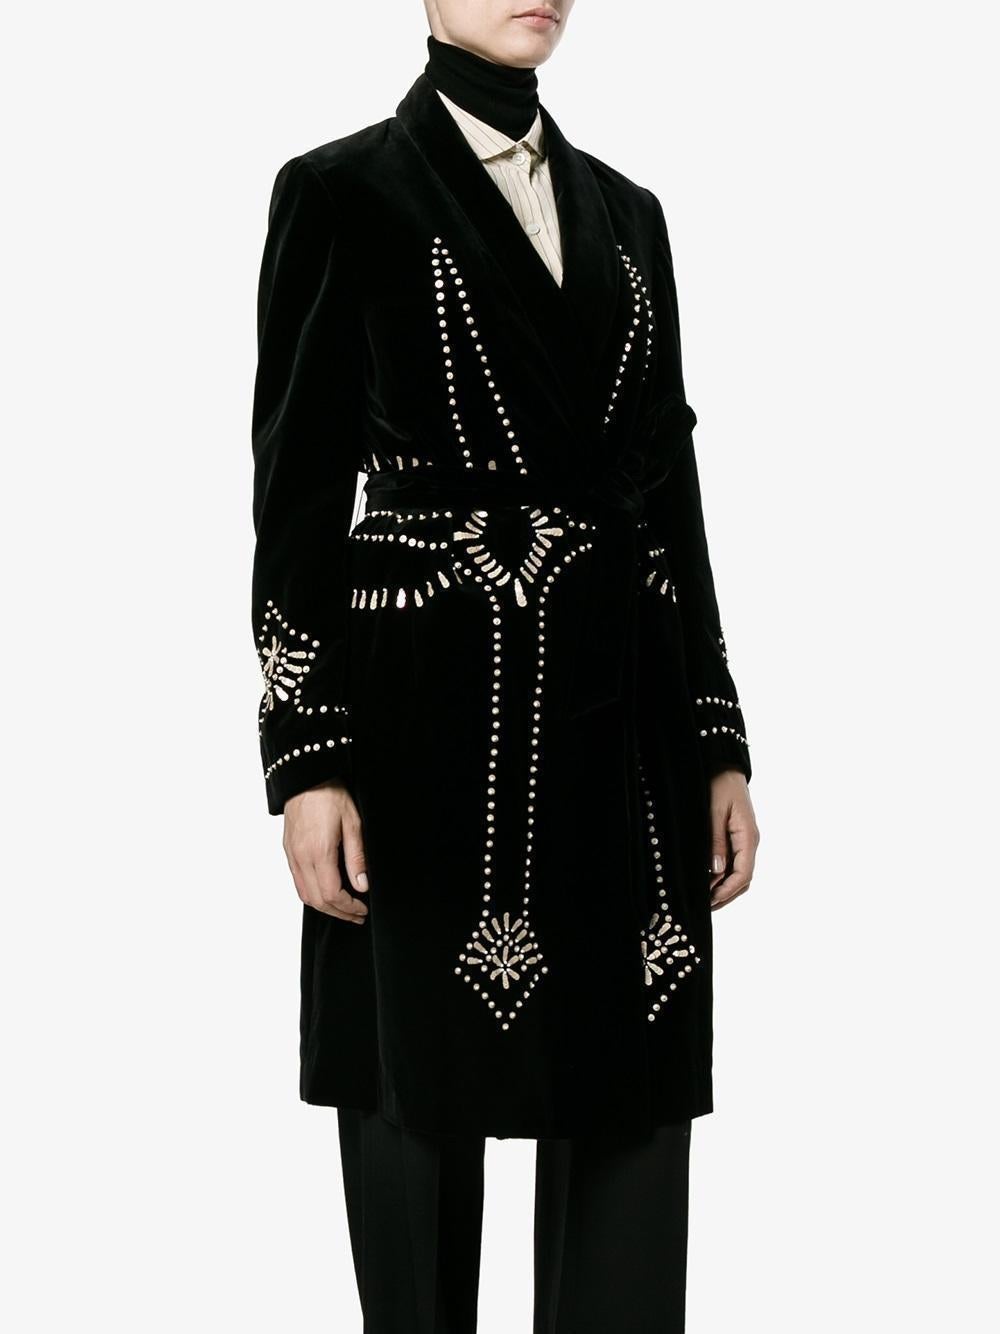 New DRIES VAN NOTEN 'Ravik' Black Sequin Embellished Velvet Coat FR38 US6 In New Condition For Sale In Brossard, QC